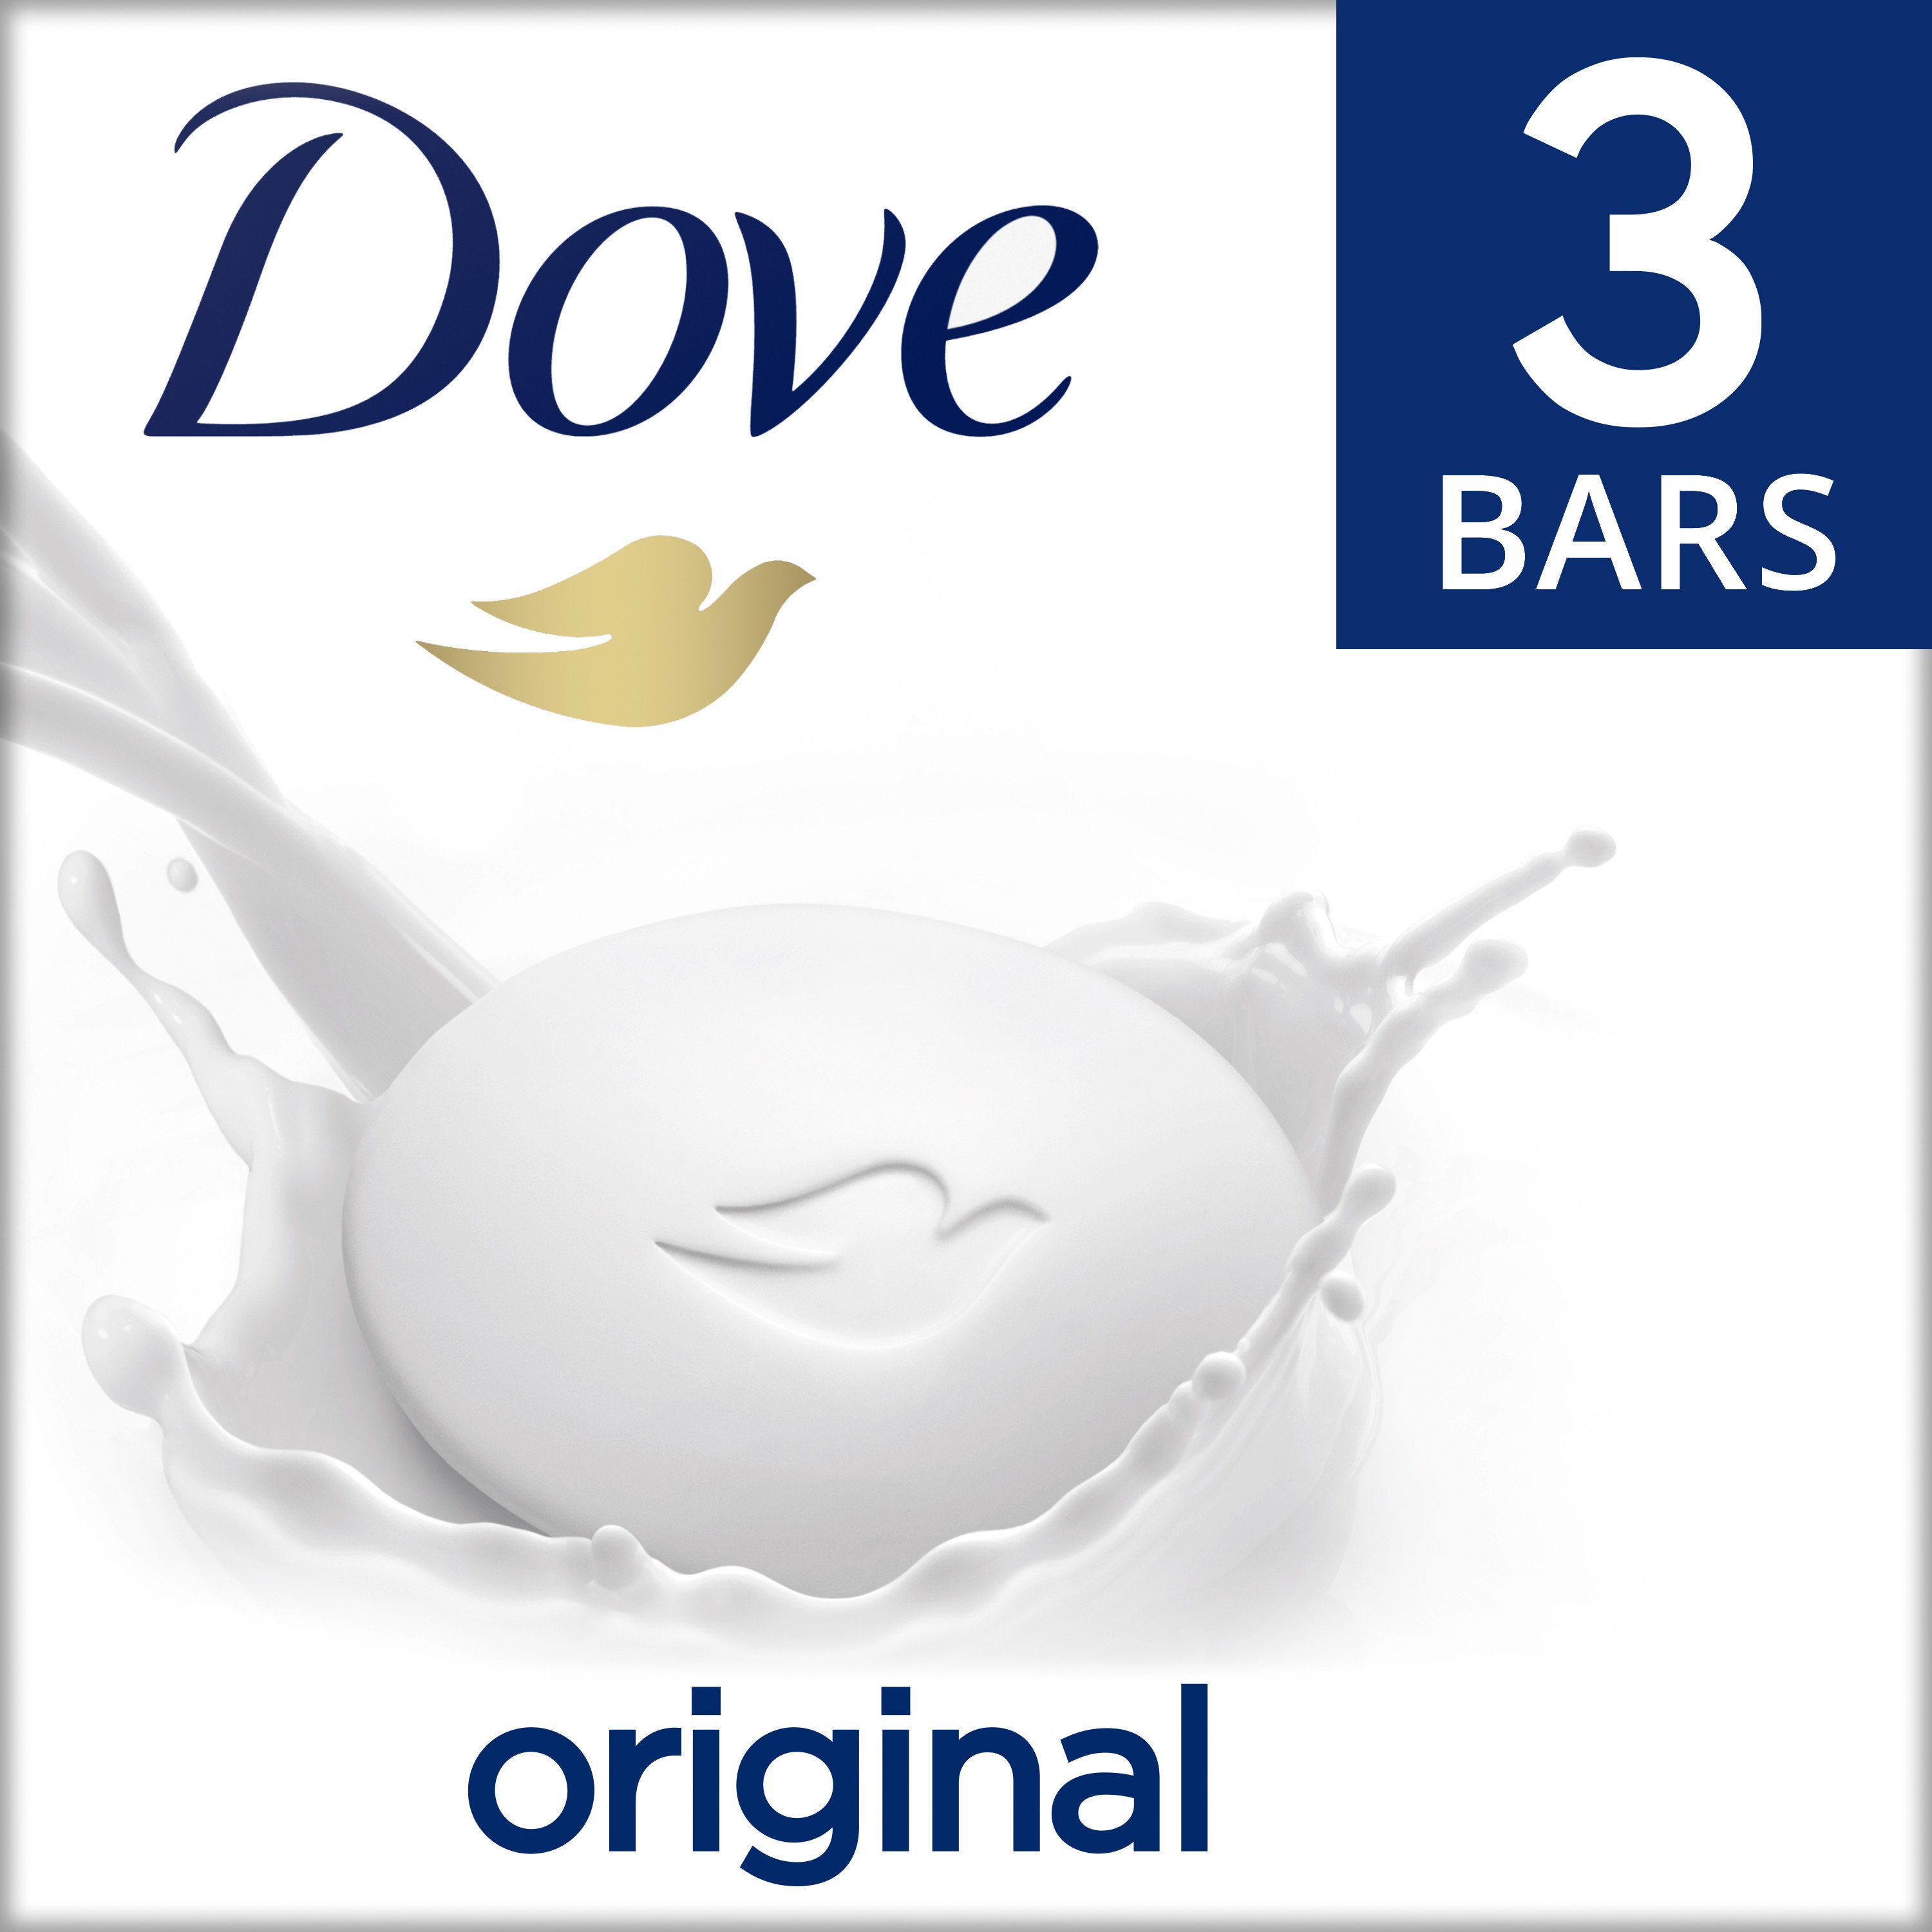 Dove Men+Care Deep Clean Exfoliating 3 In 1 Bar Soap - Shop Hand & Bar Soap  at H-E-B